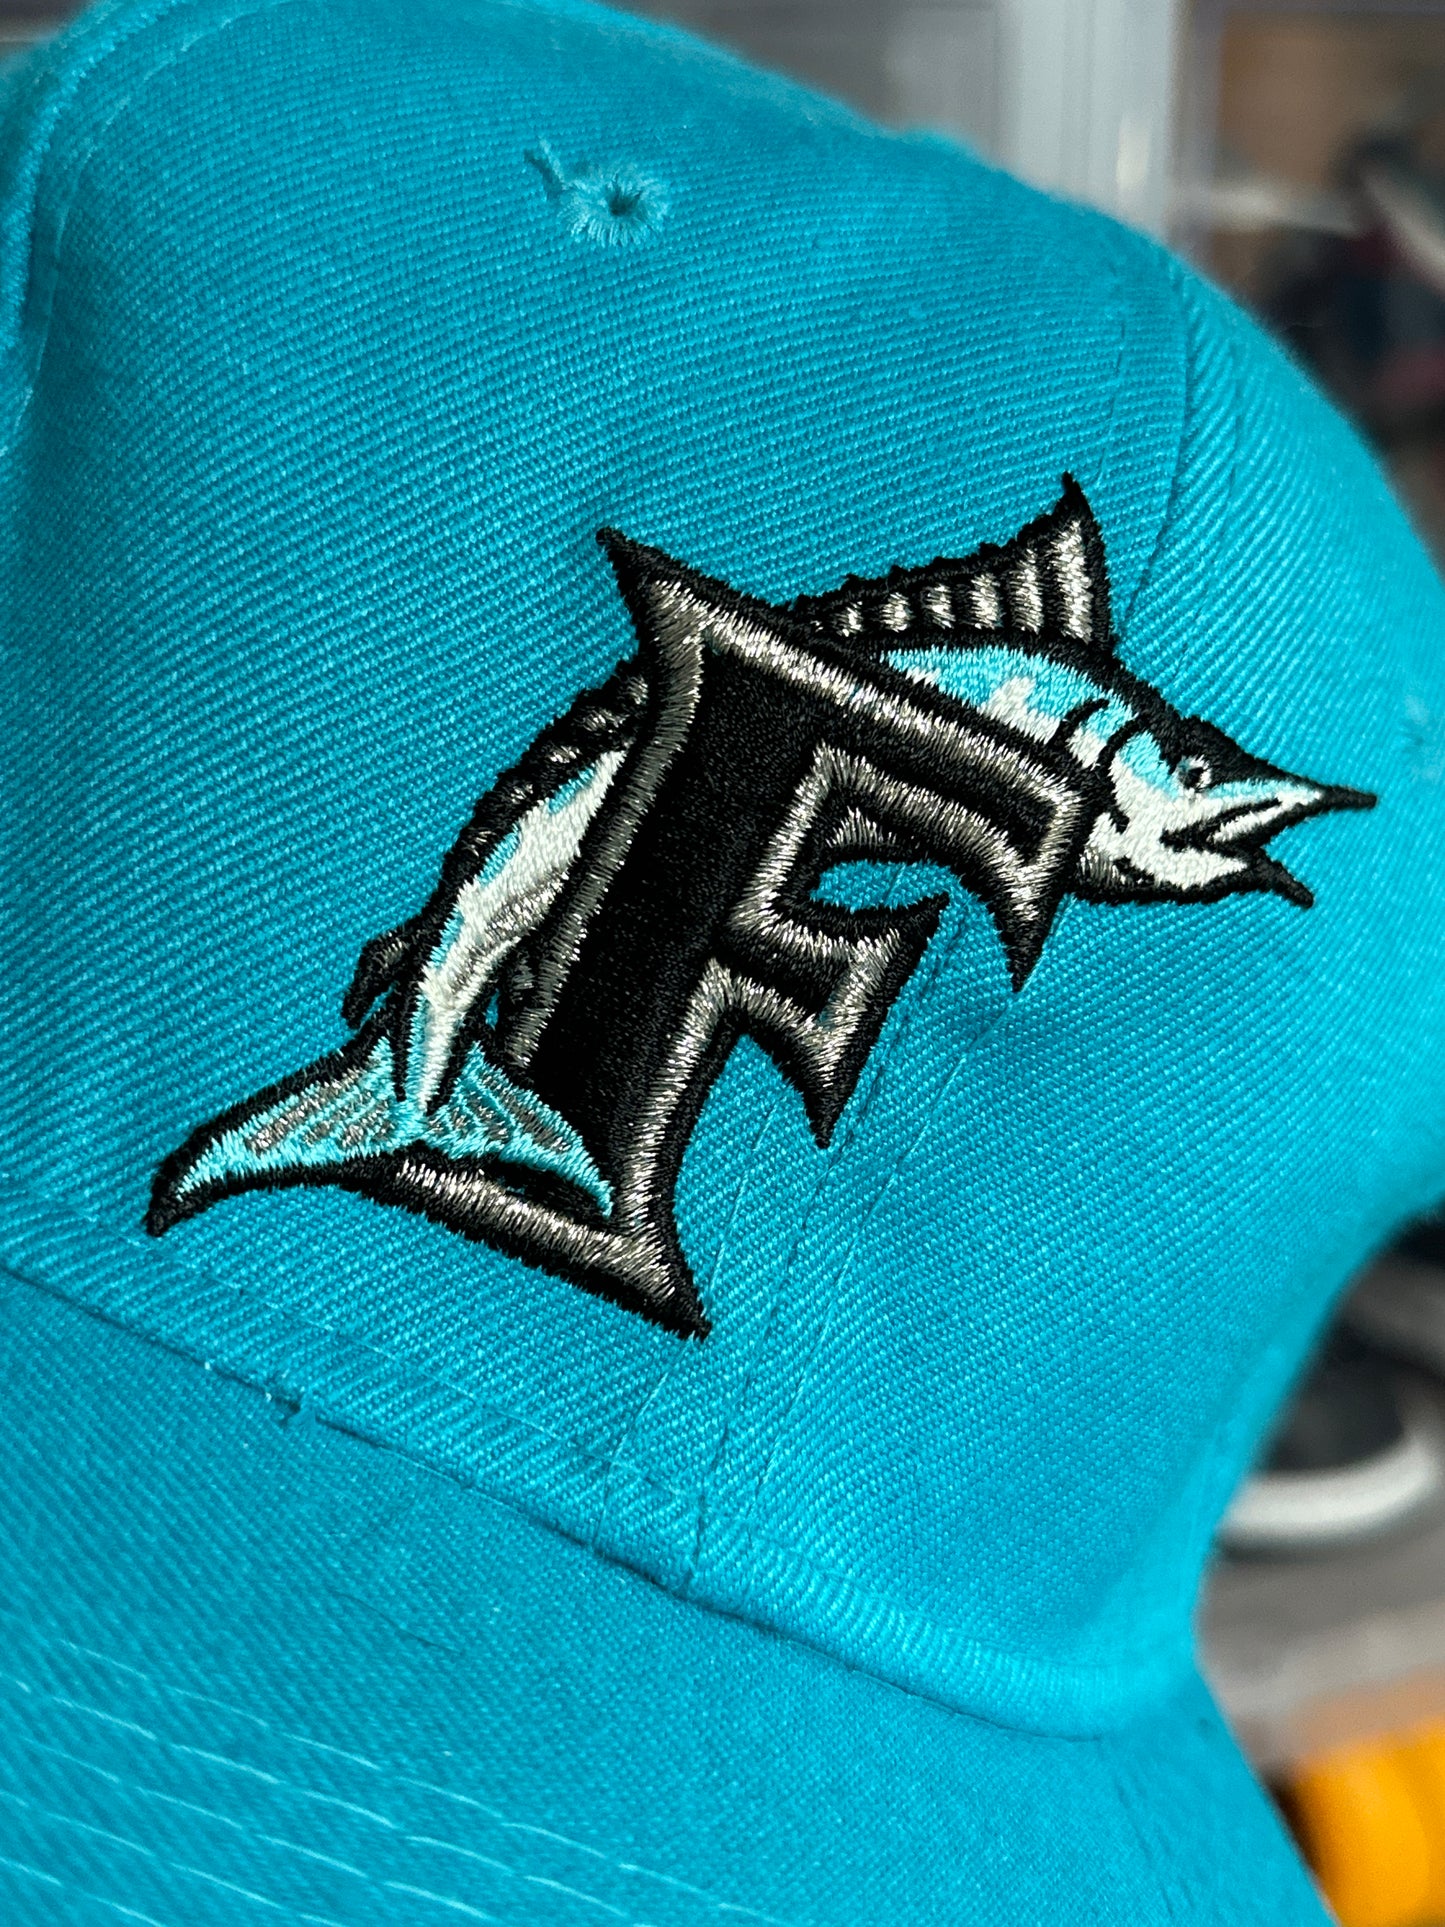 Vintage 90s Florida Marlins Sports Specialties Baseball Hat